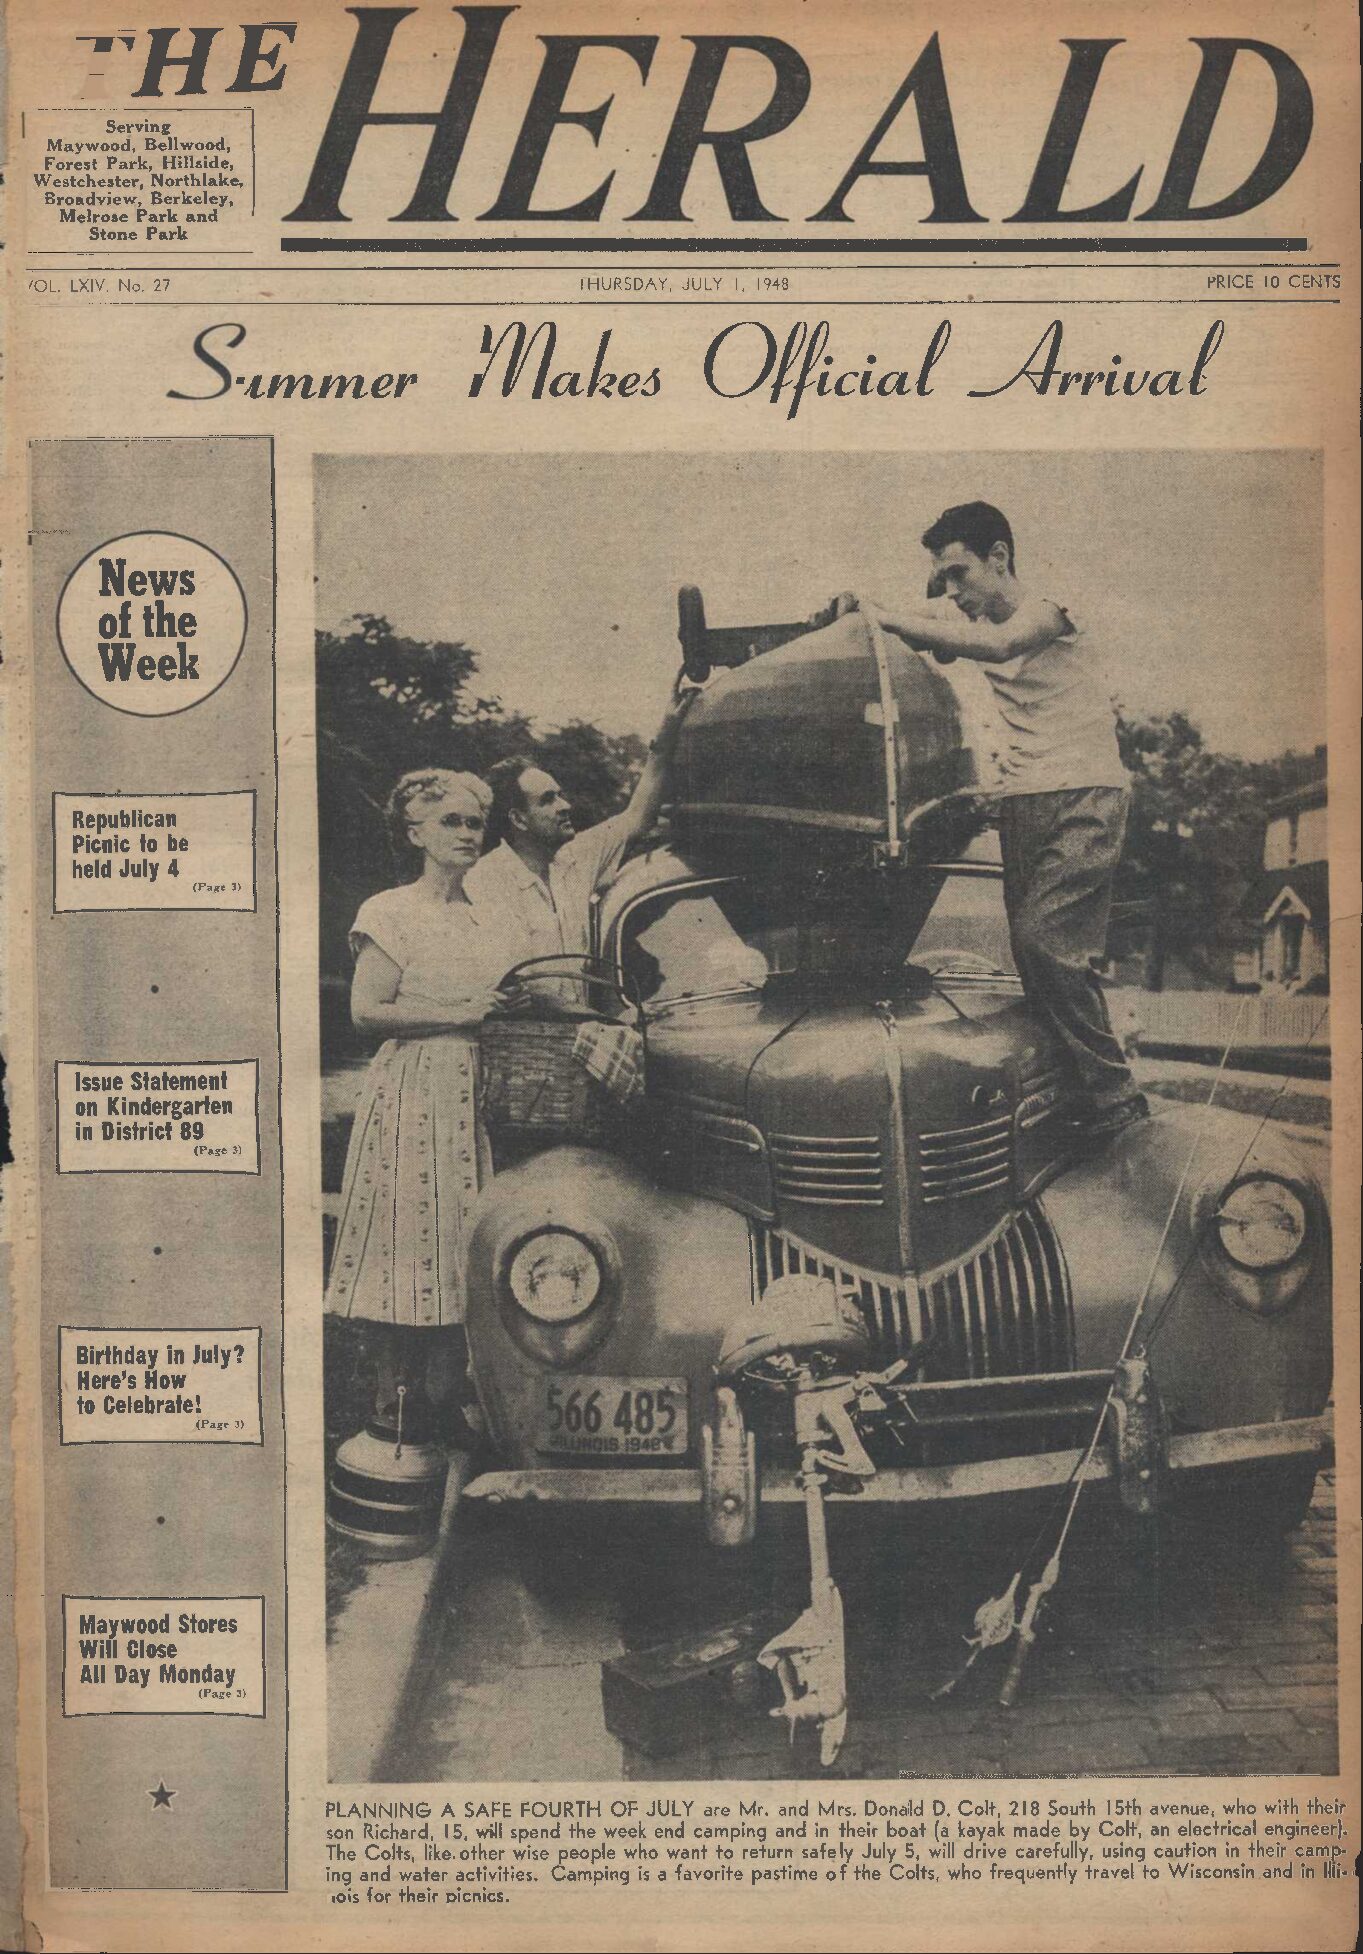 The Herald – 19480701